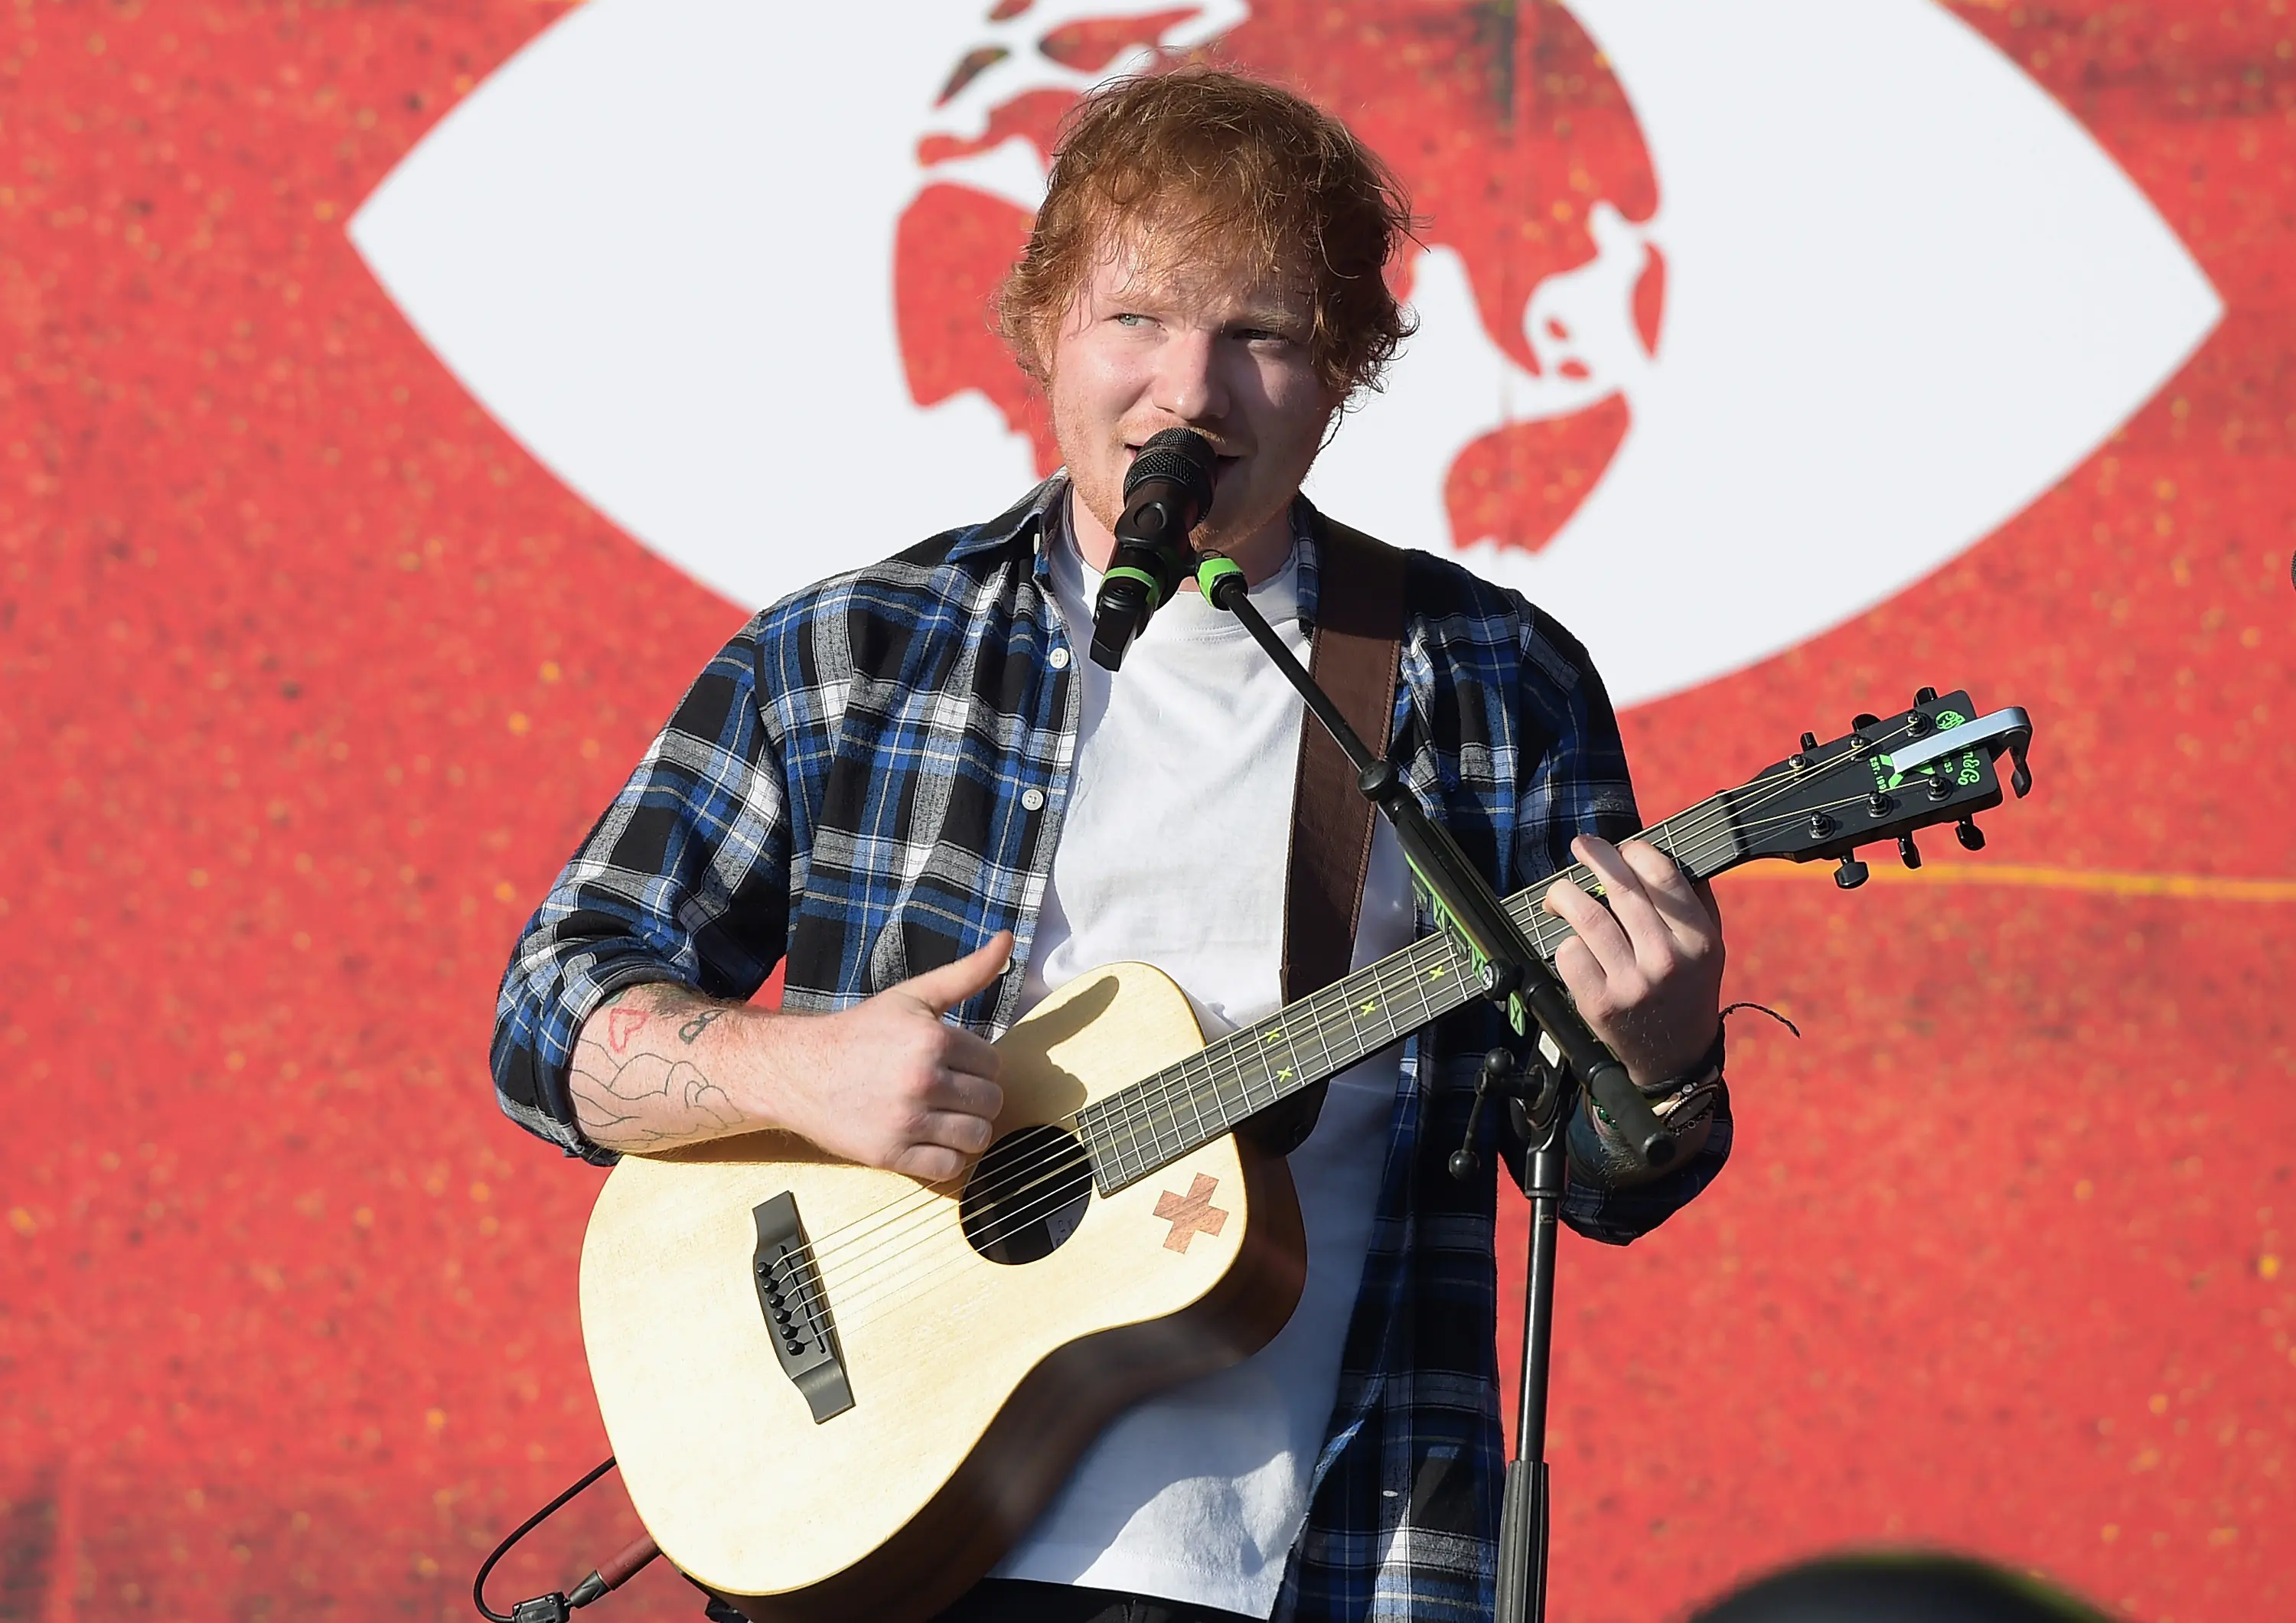 Ed Sheeran (AFP/Bintang.com)